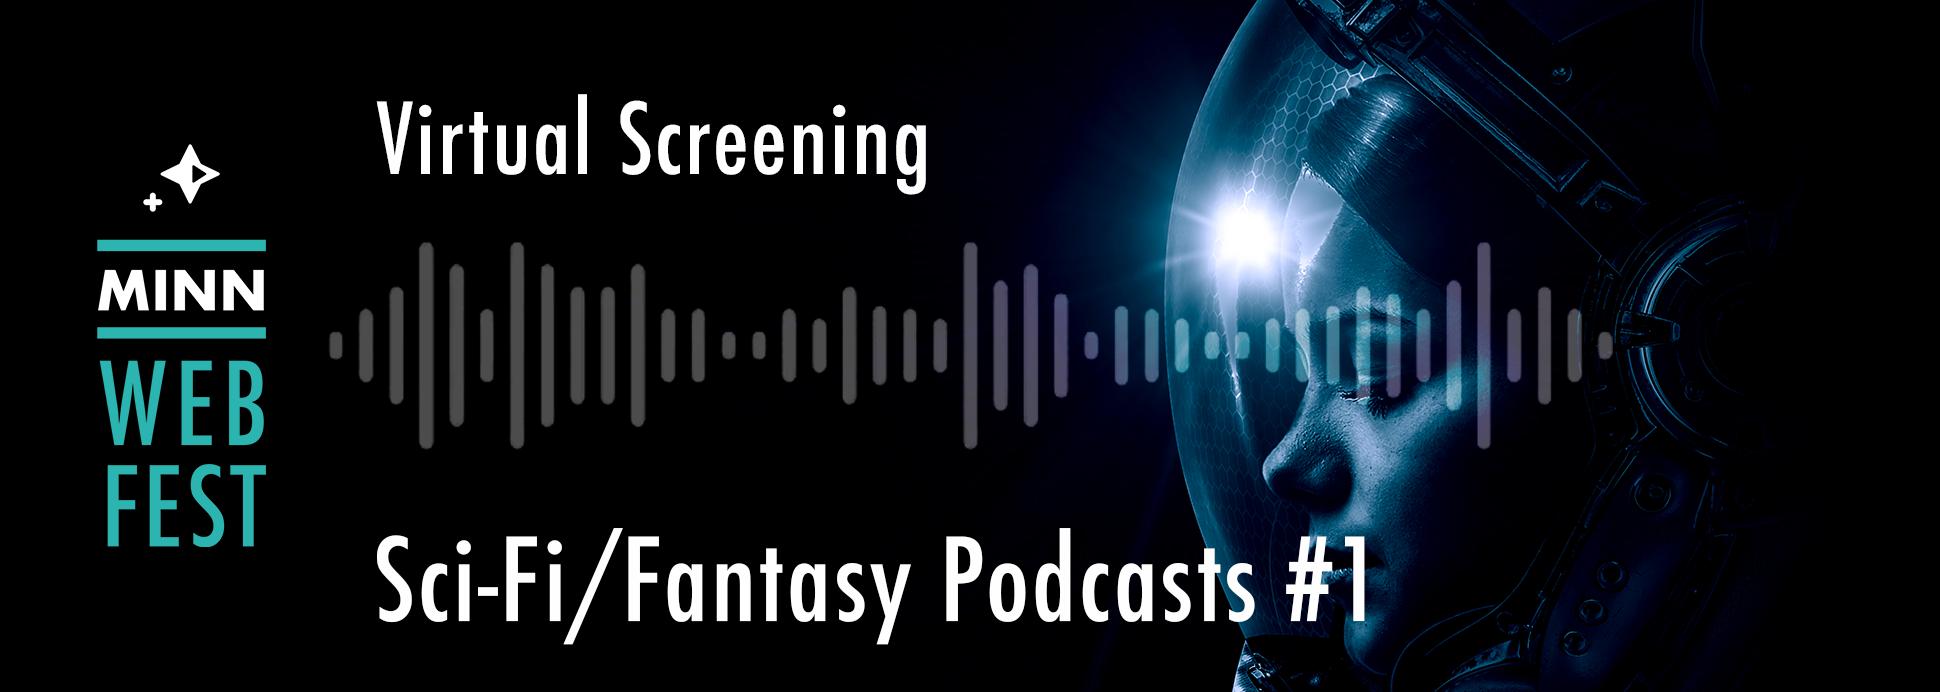 Sci-Fi/Fantasy Podcasts #1